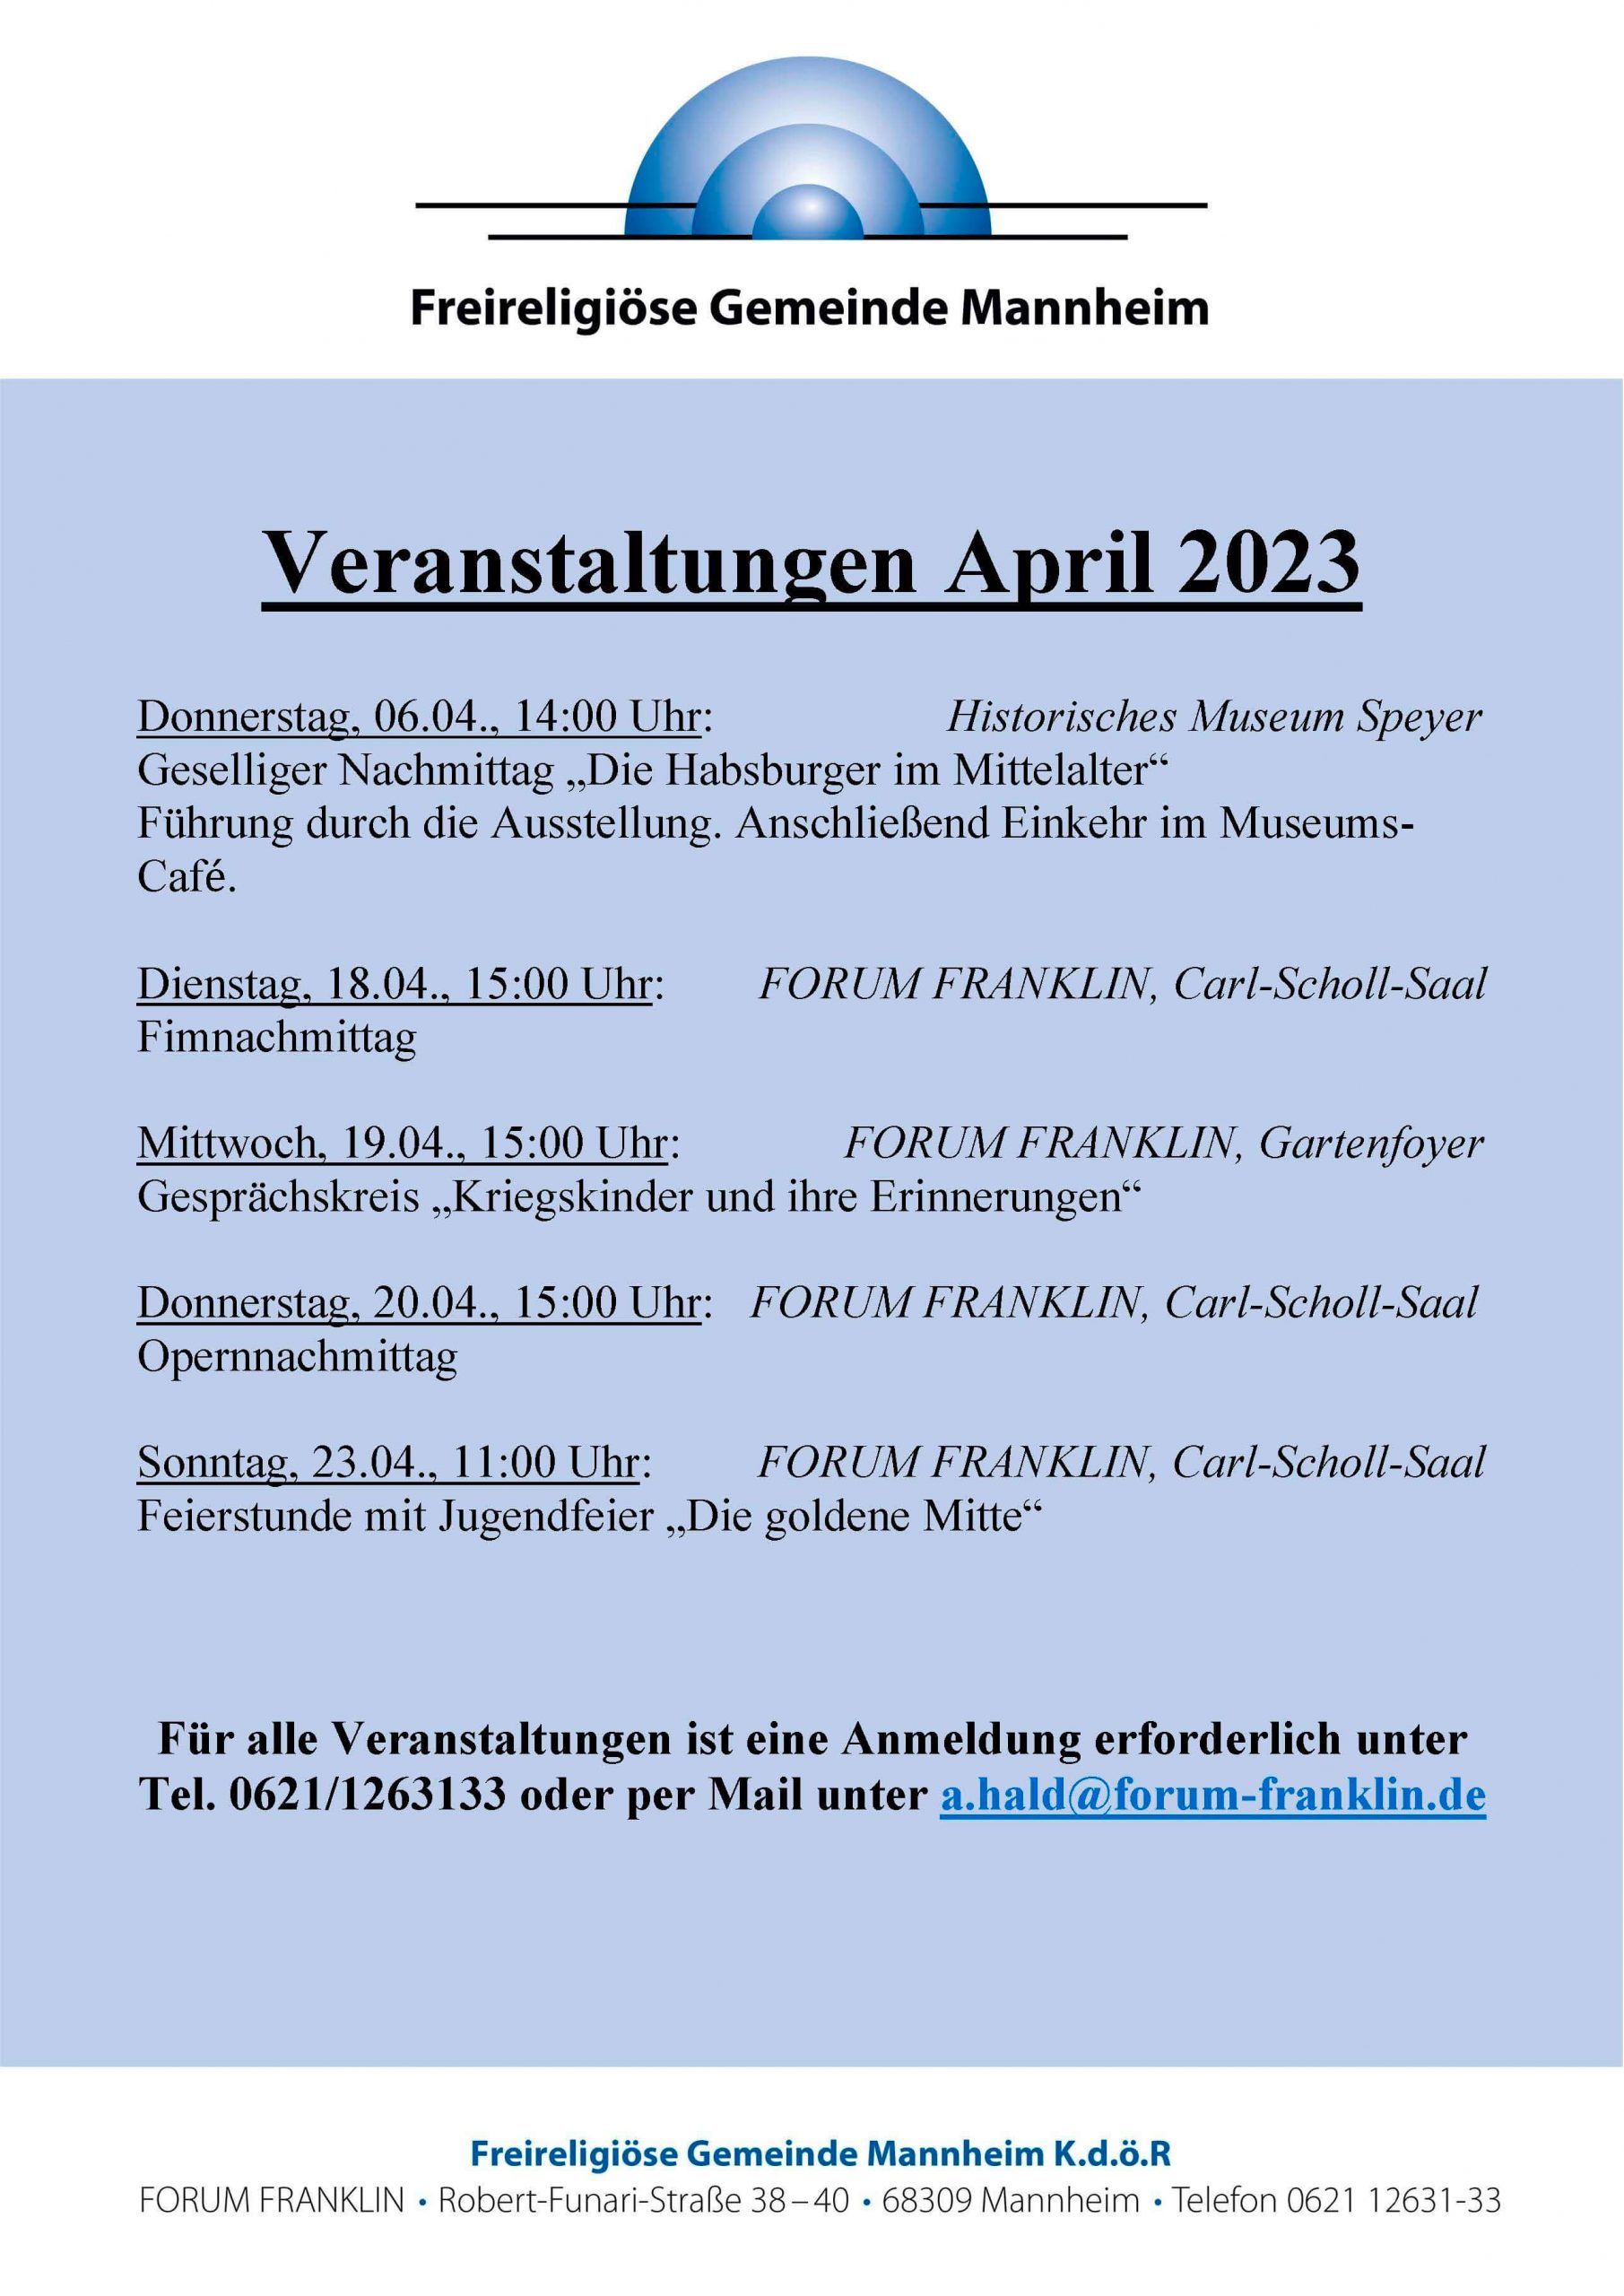 FORUM FRANKLIN Veranstaltungen April 2023